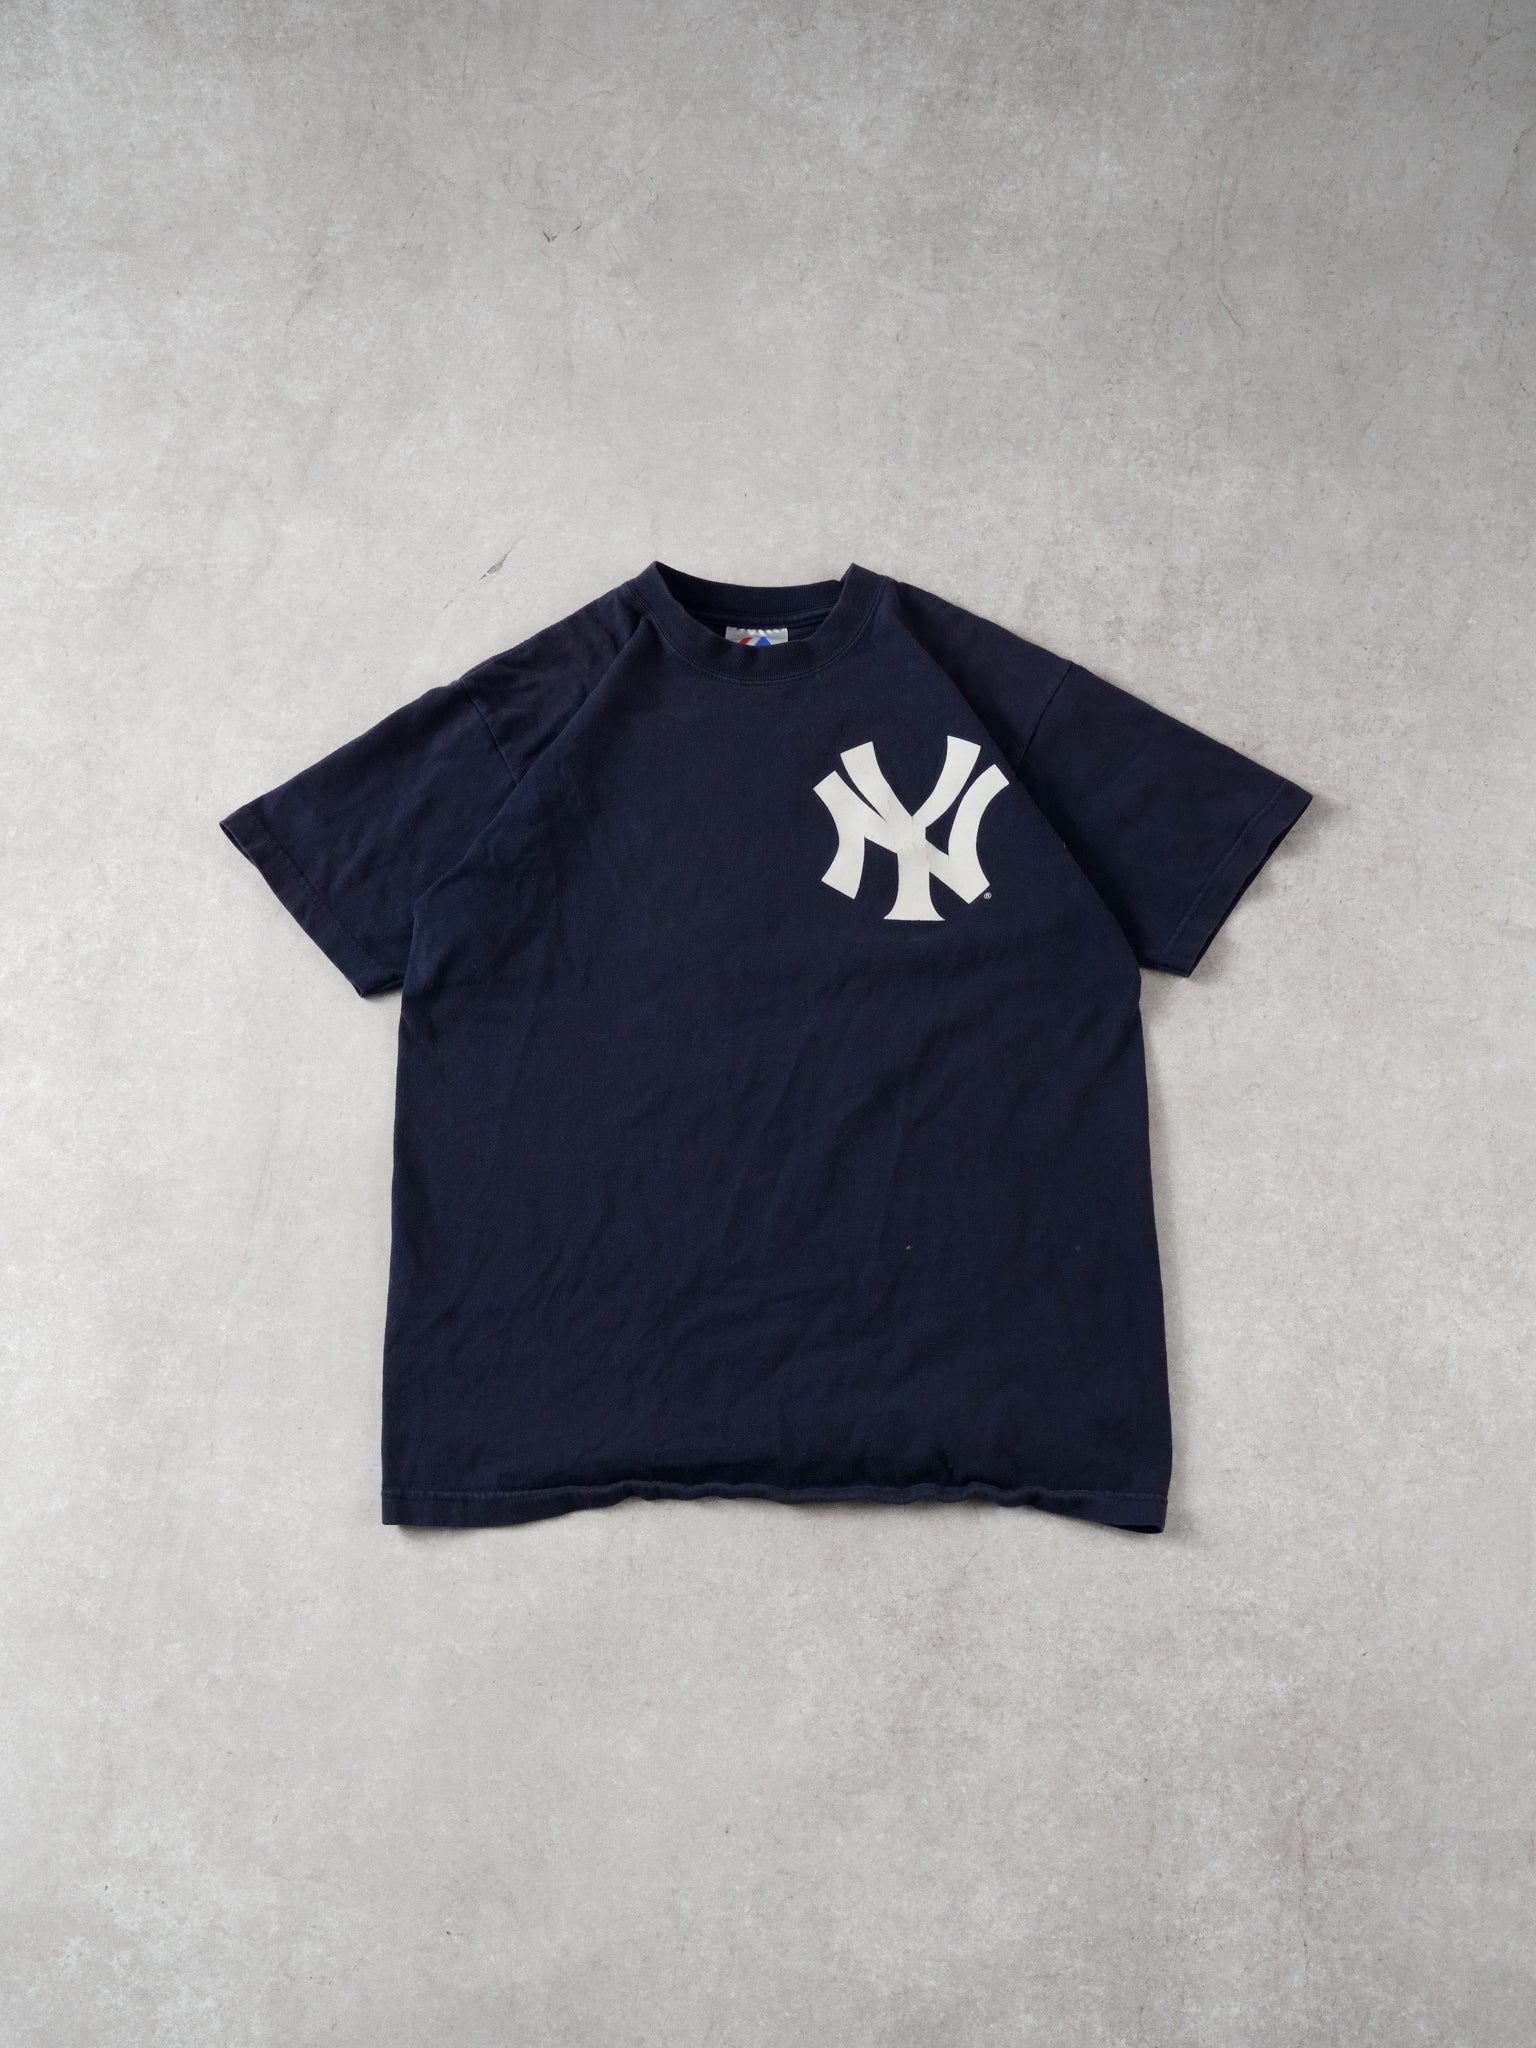 Vintage 90s Navy Blue New York Yankees #13 Rodriguez Majestics Tee (S)